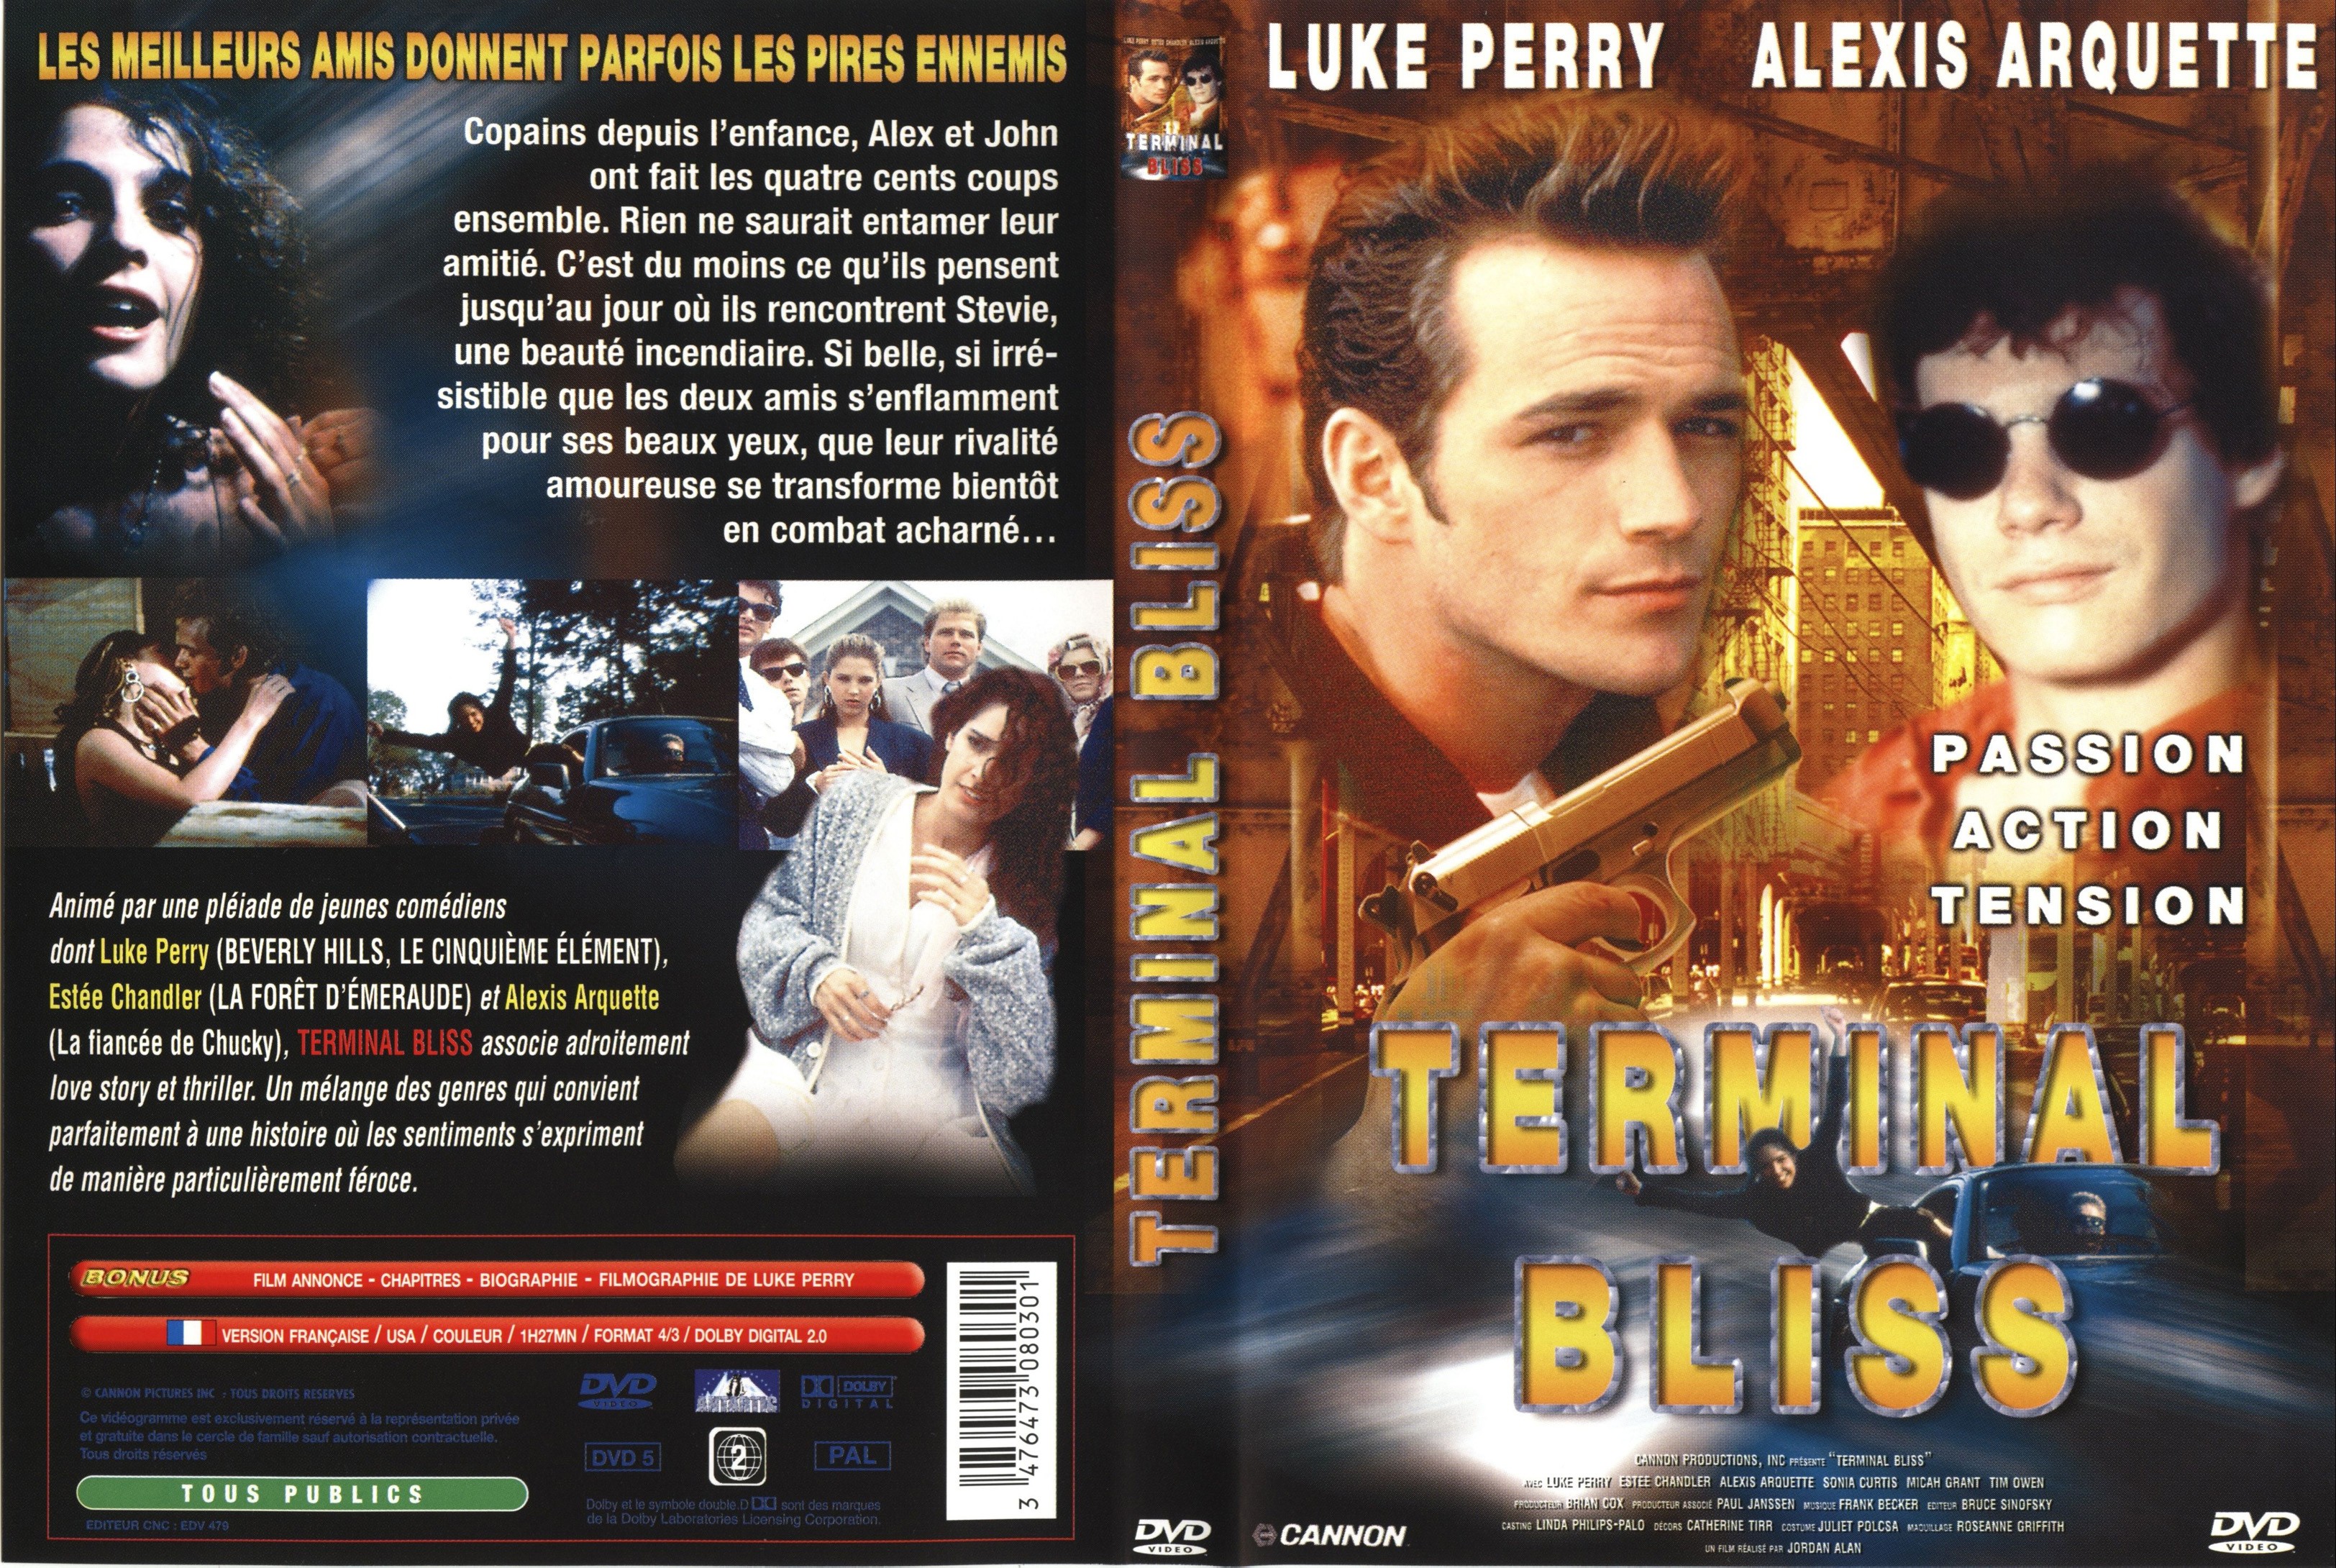 Jaquette DVD Terminal bliss